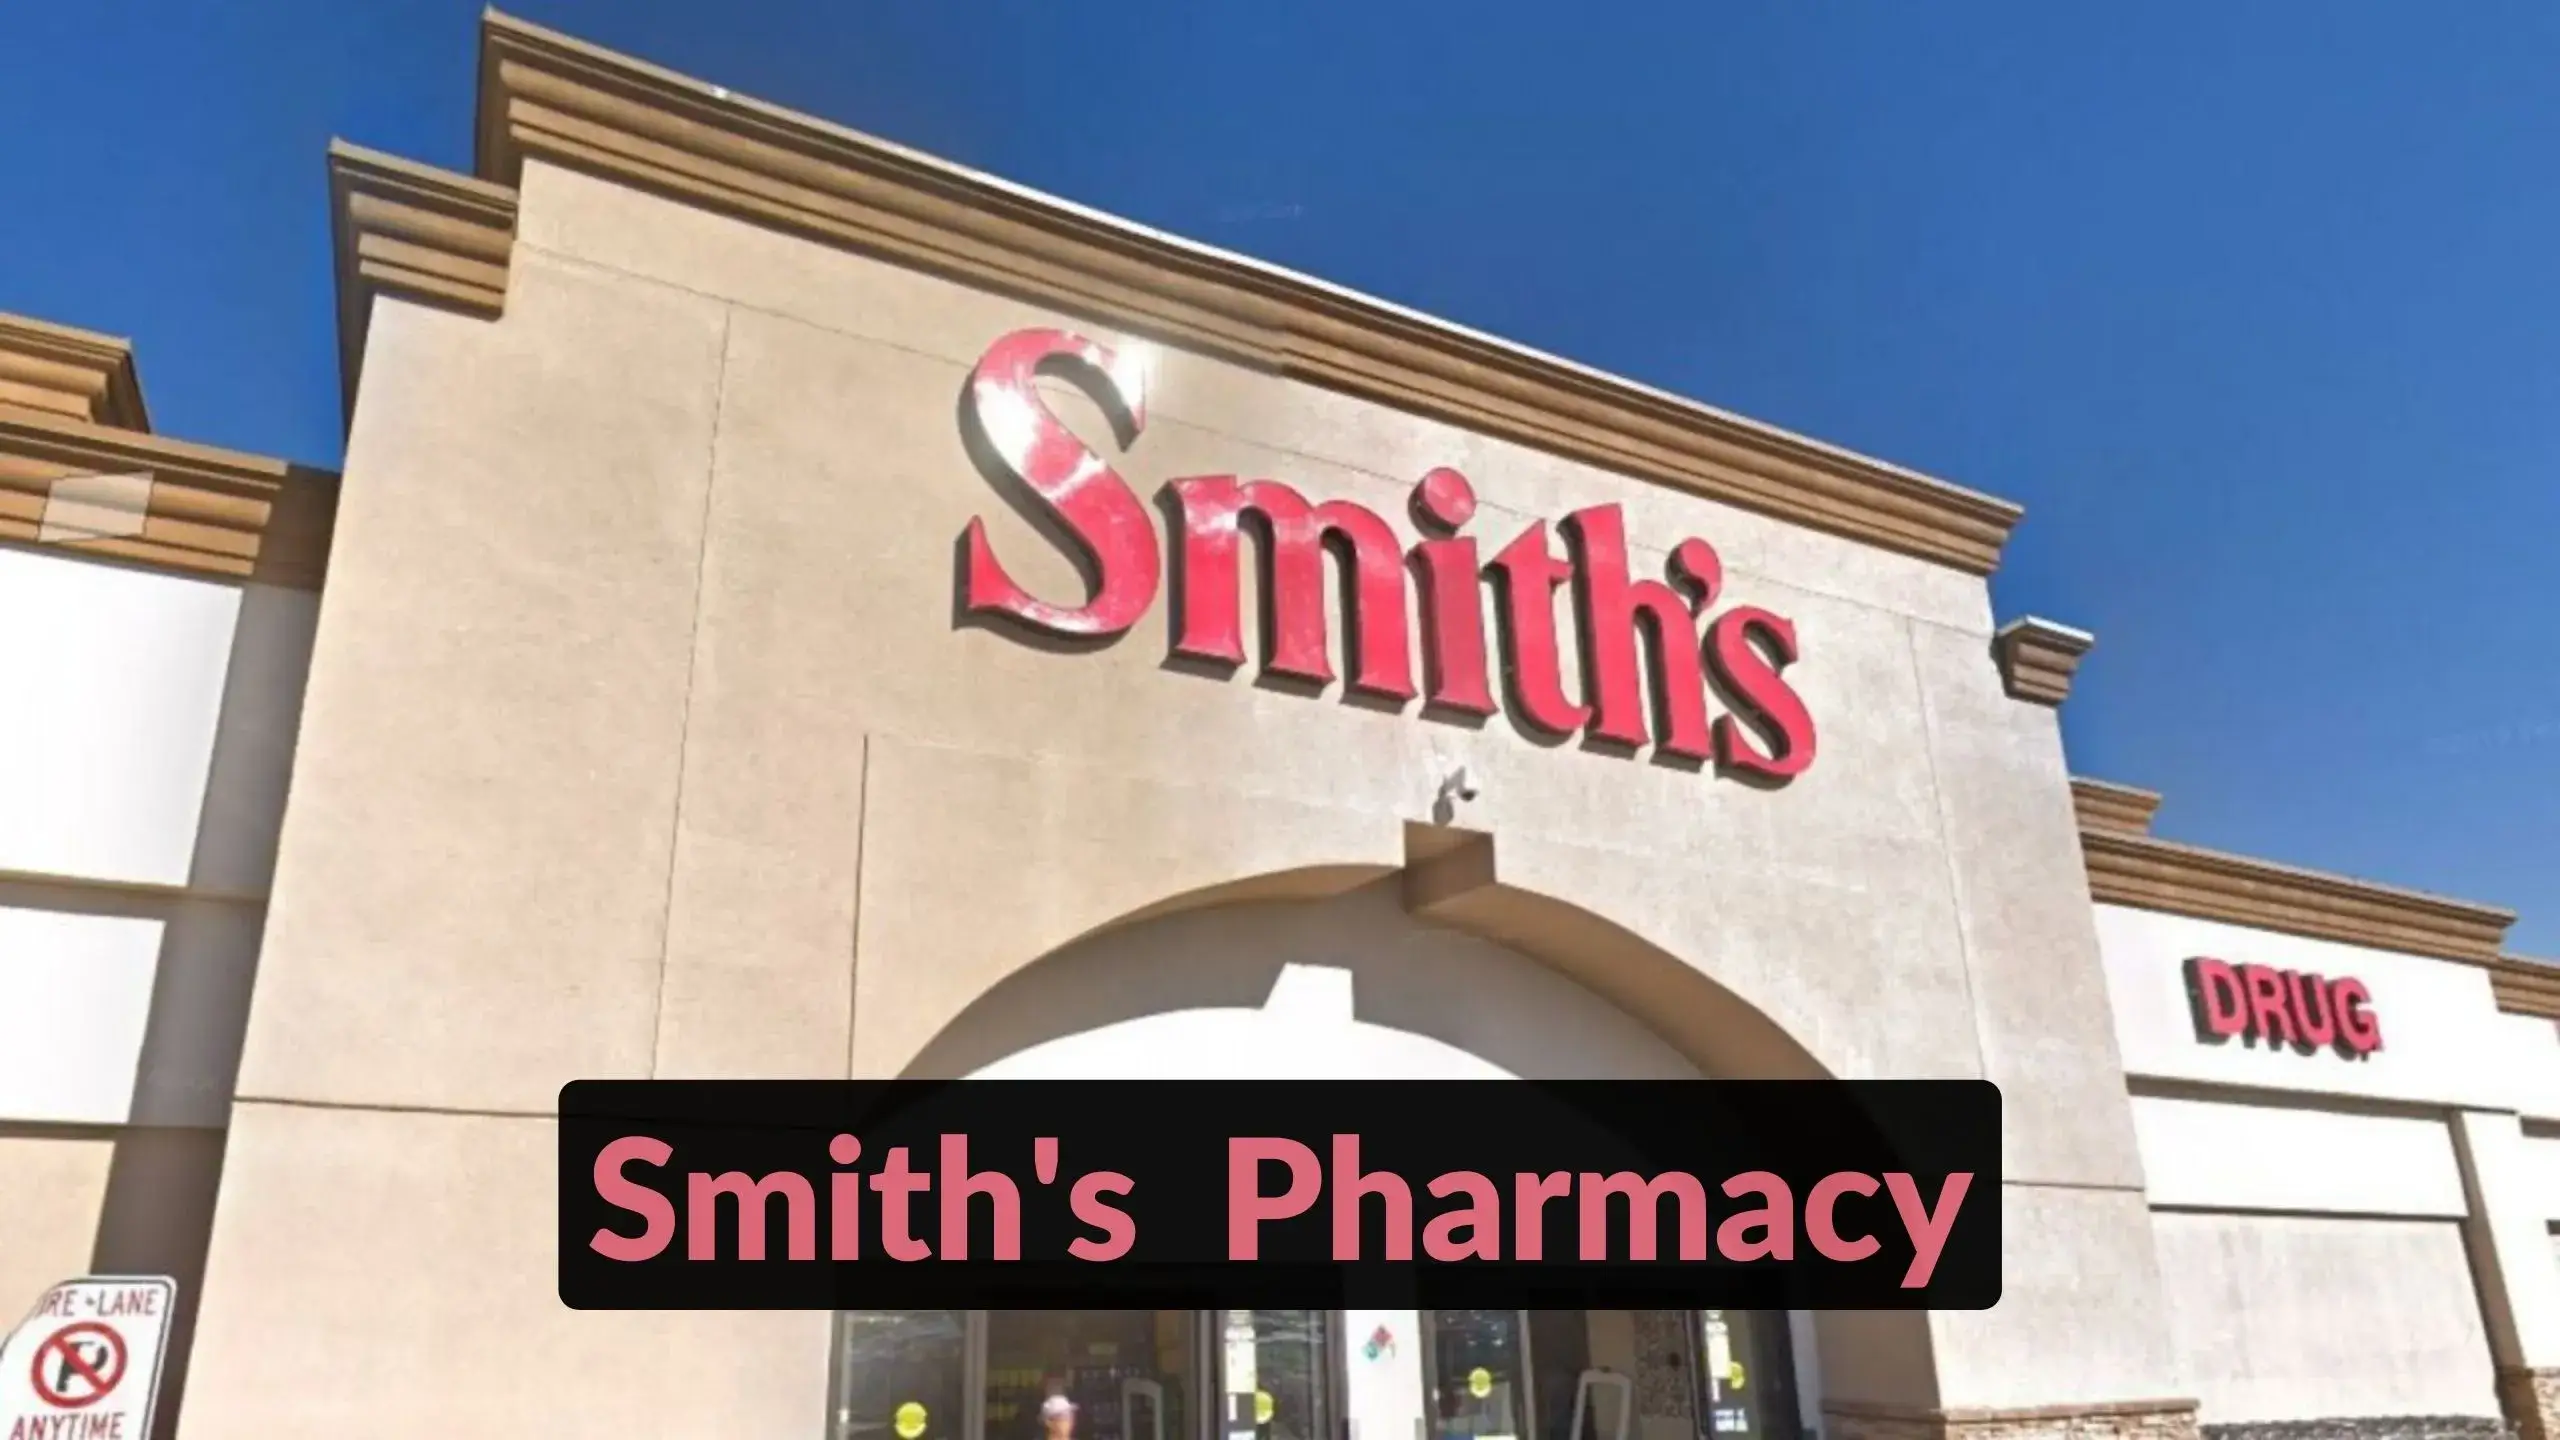 Smith's Pharmacy Hours & Find Smith's Pharmacy Near Me Location - store-hour.com